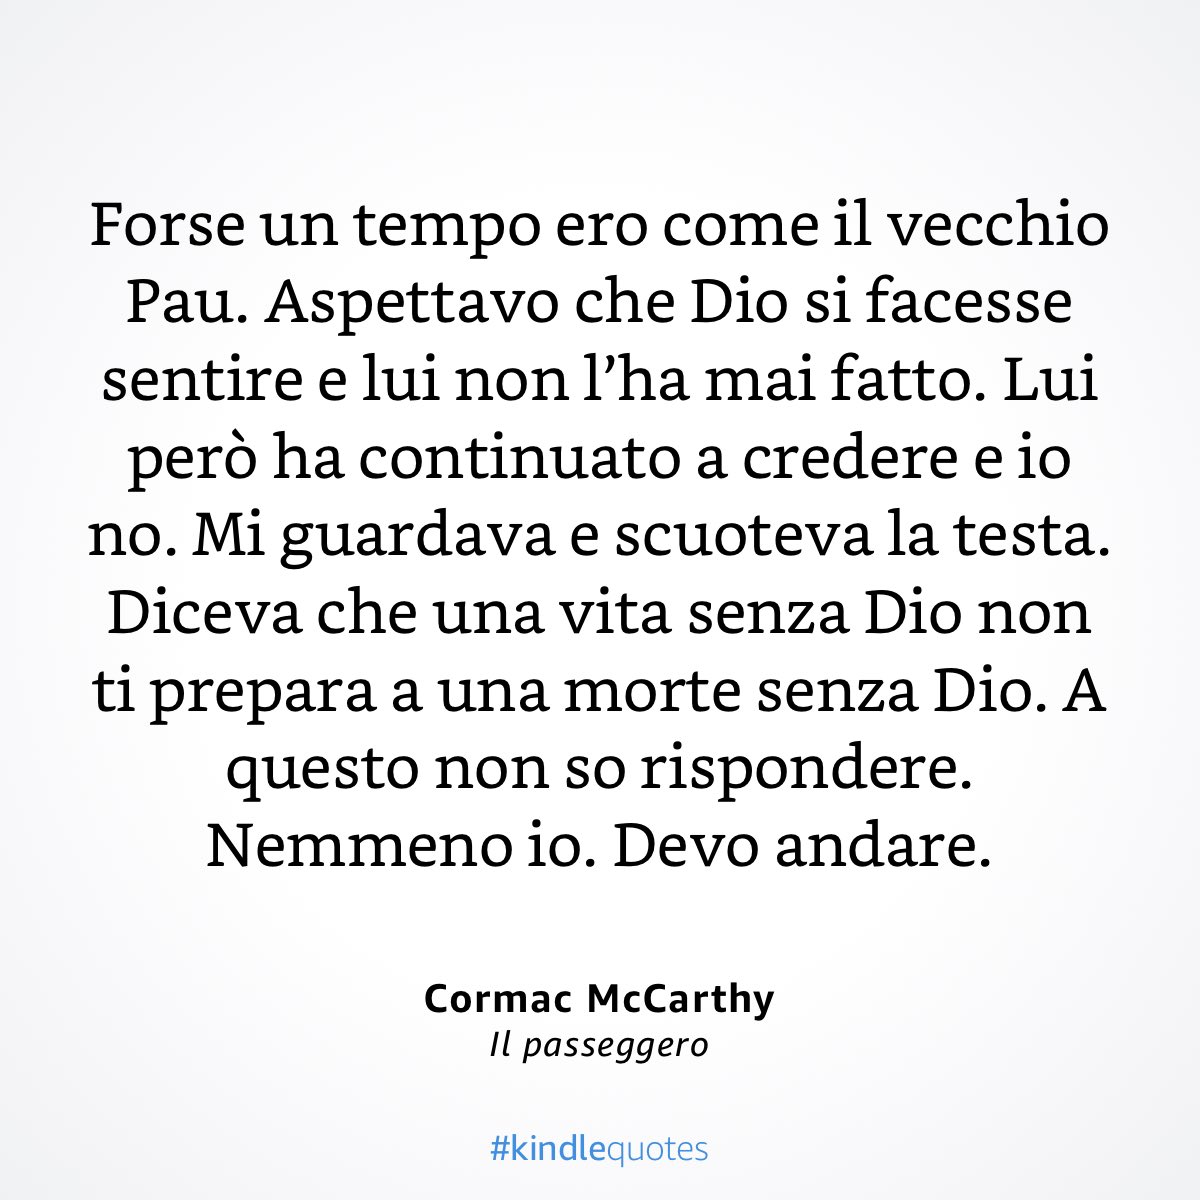 Antonio Spadaro on X: Il grande Cormac McCarthy. Vai in pace. Ci